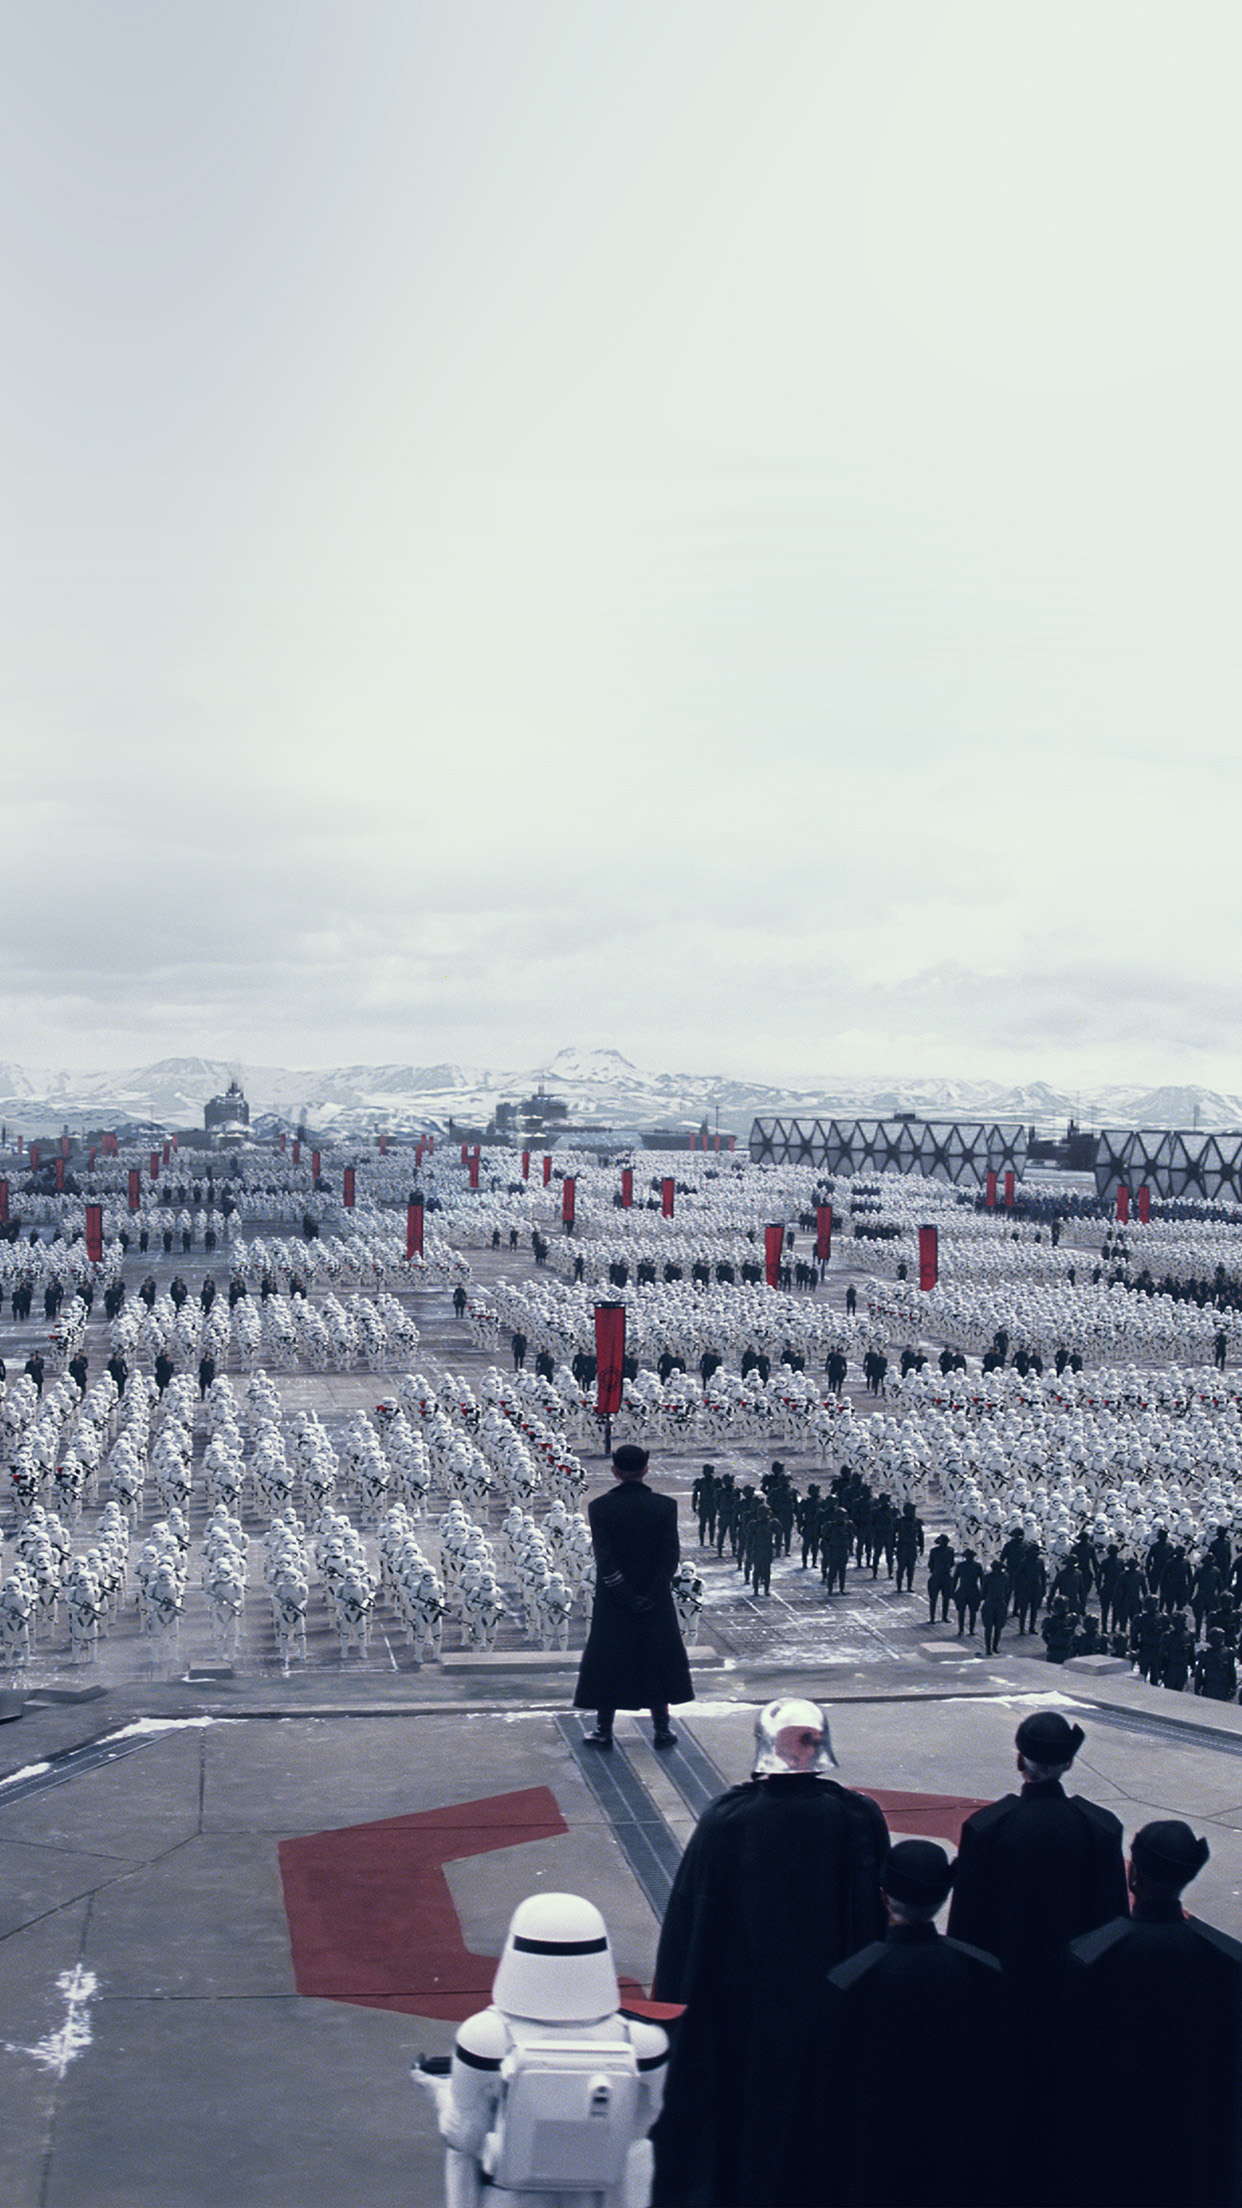 Force Awakens Starwars First Order Art Film Android wallpaper